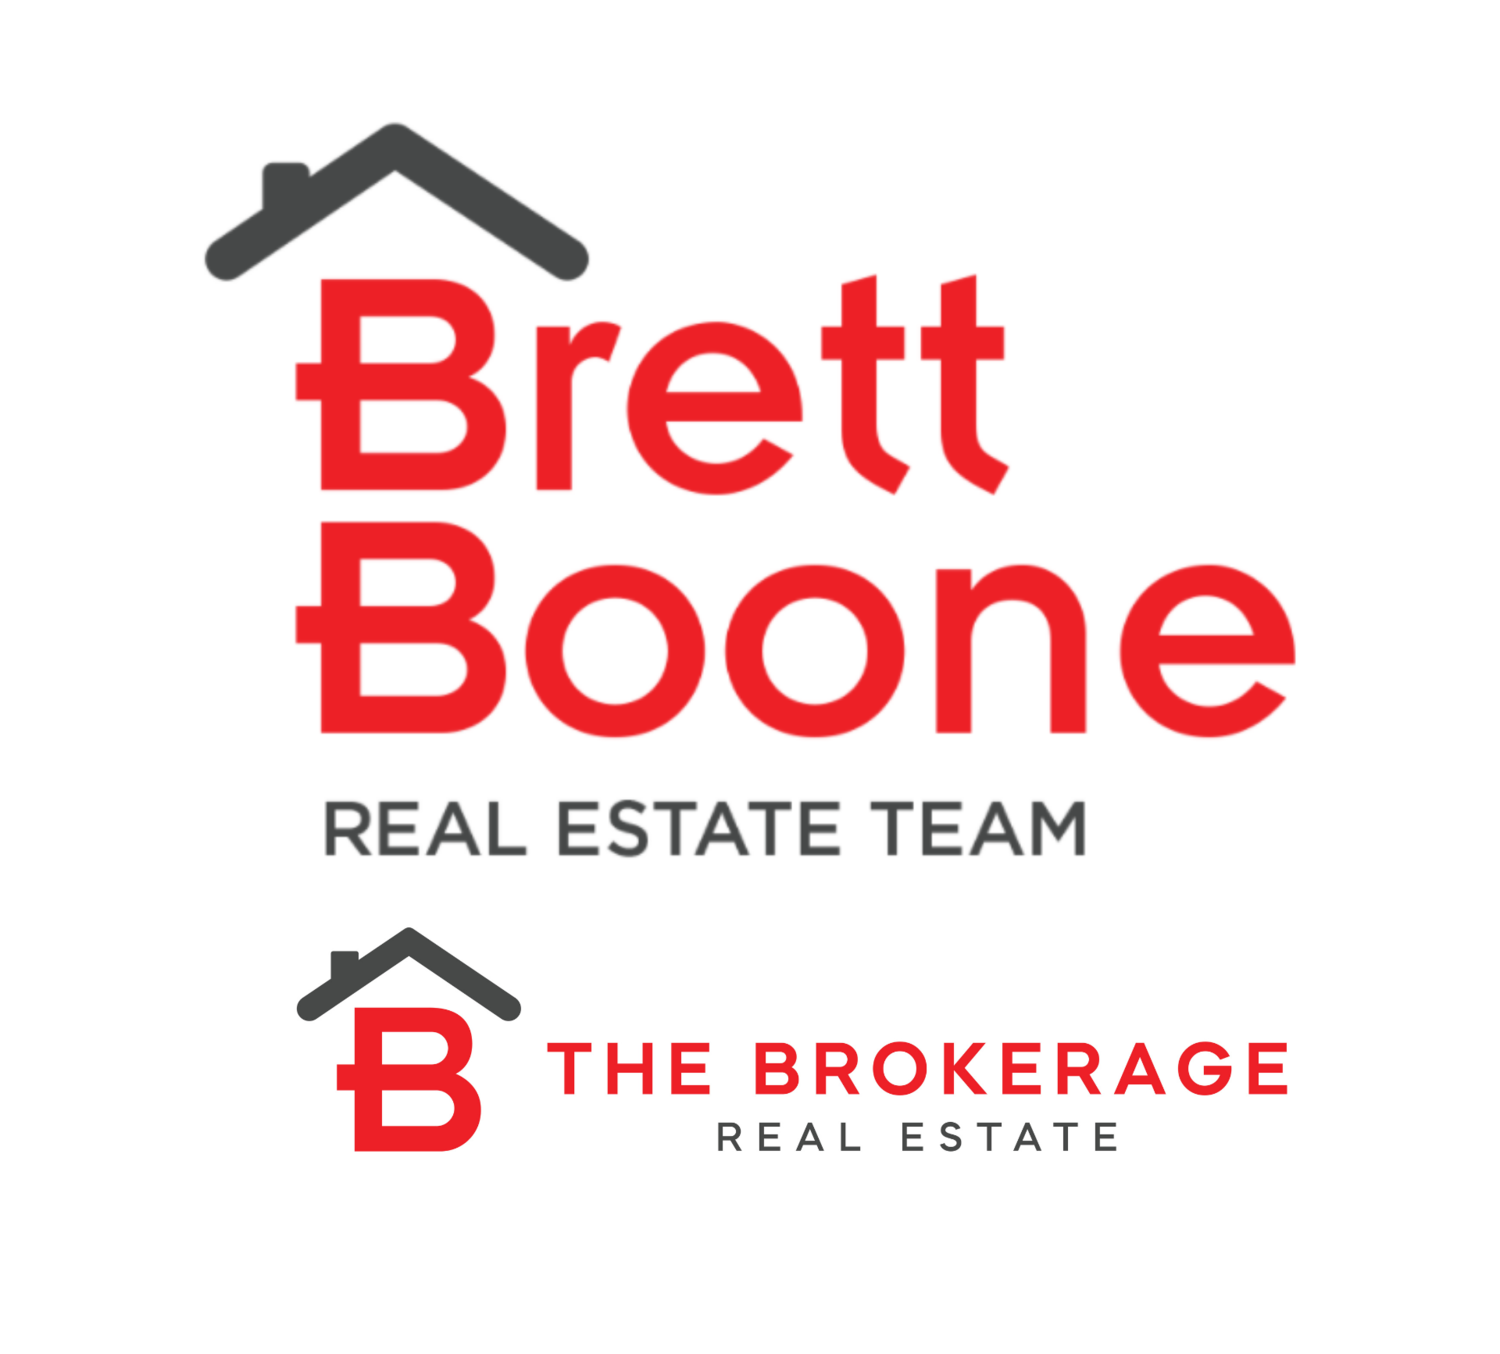 Brett Boone Real Estate Team